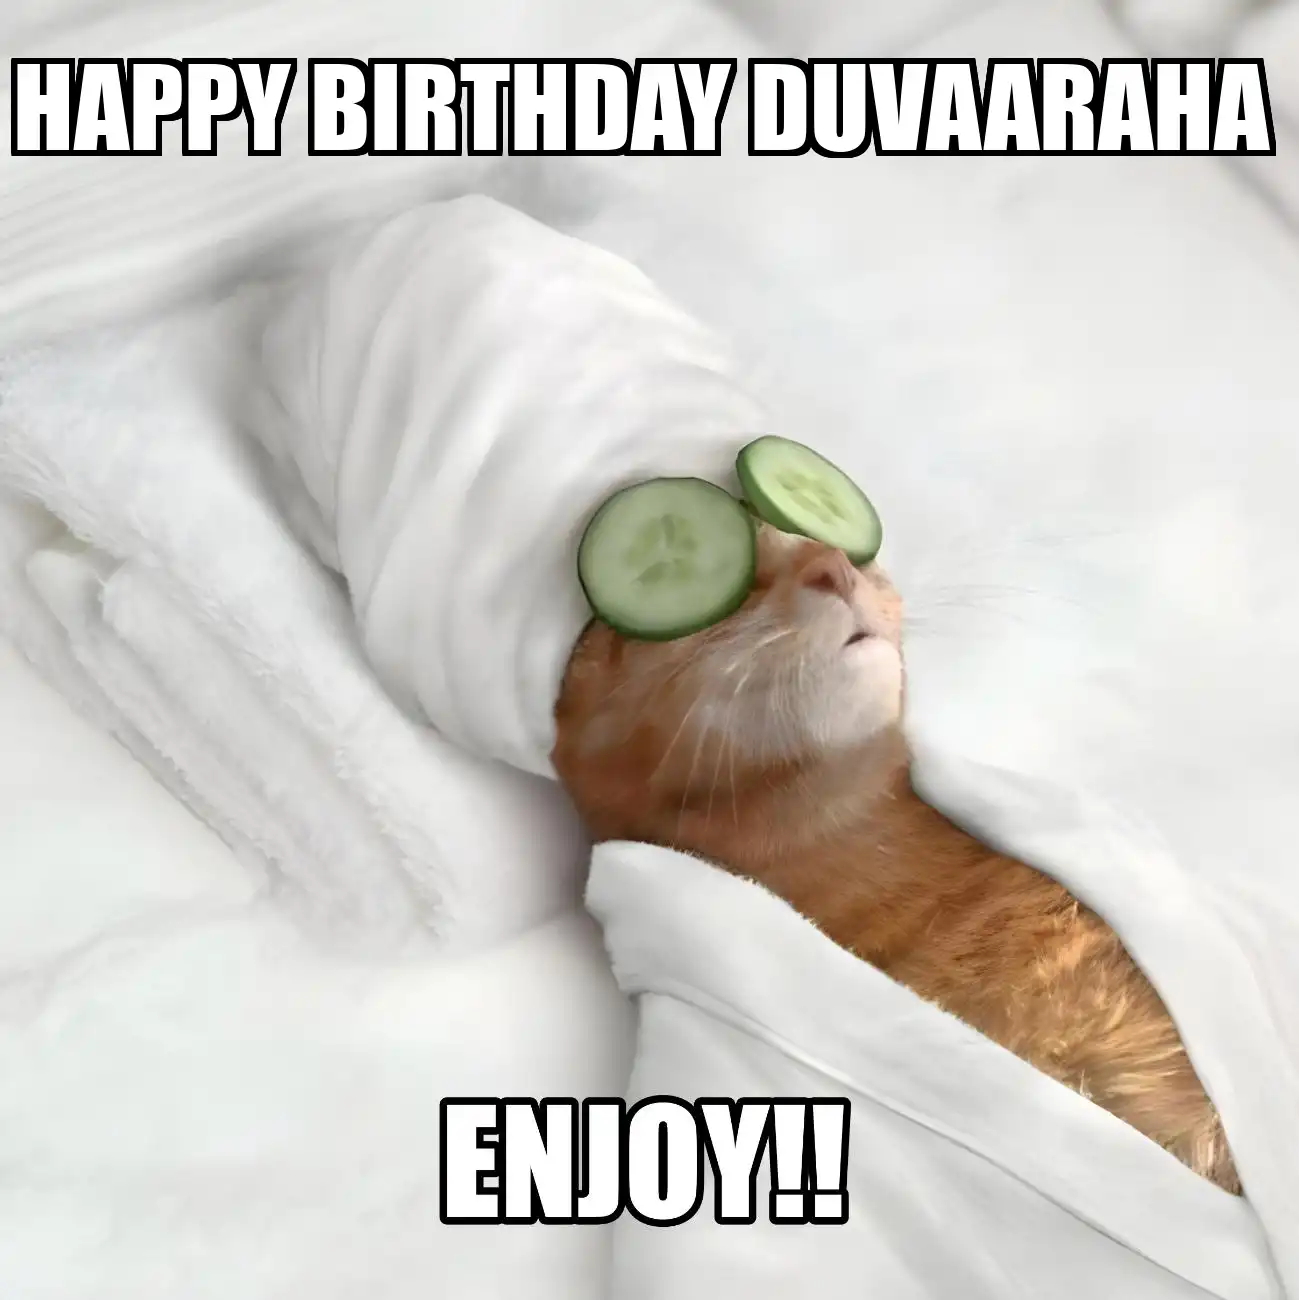 Happy Birthday Duvaaraha Enjoy Cat Meme